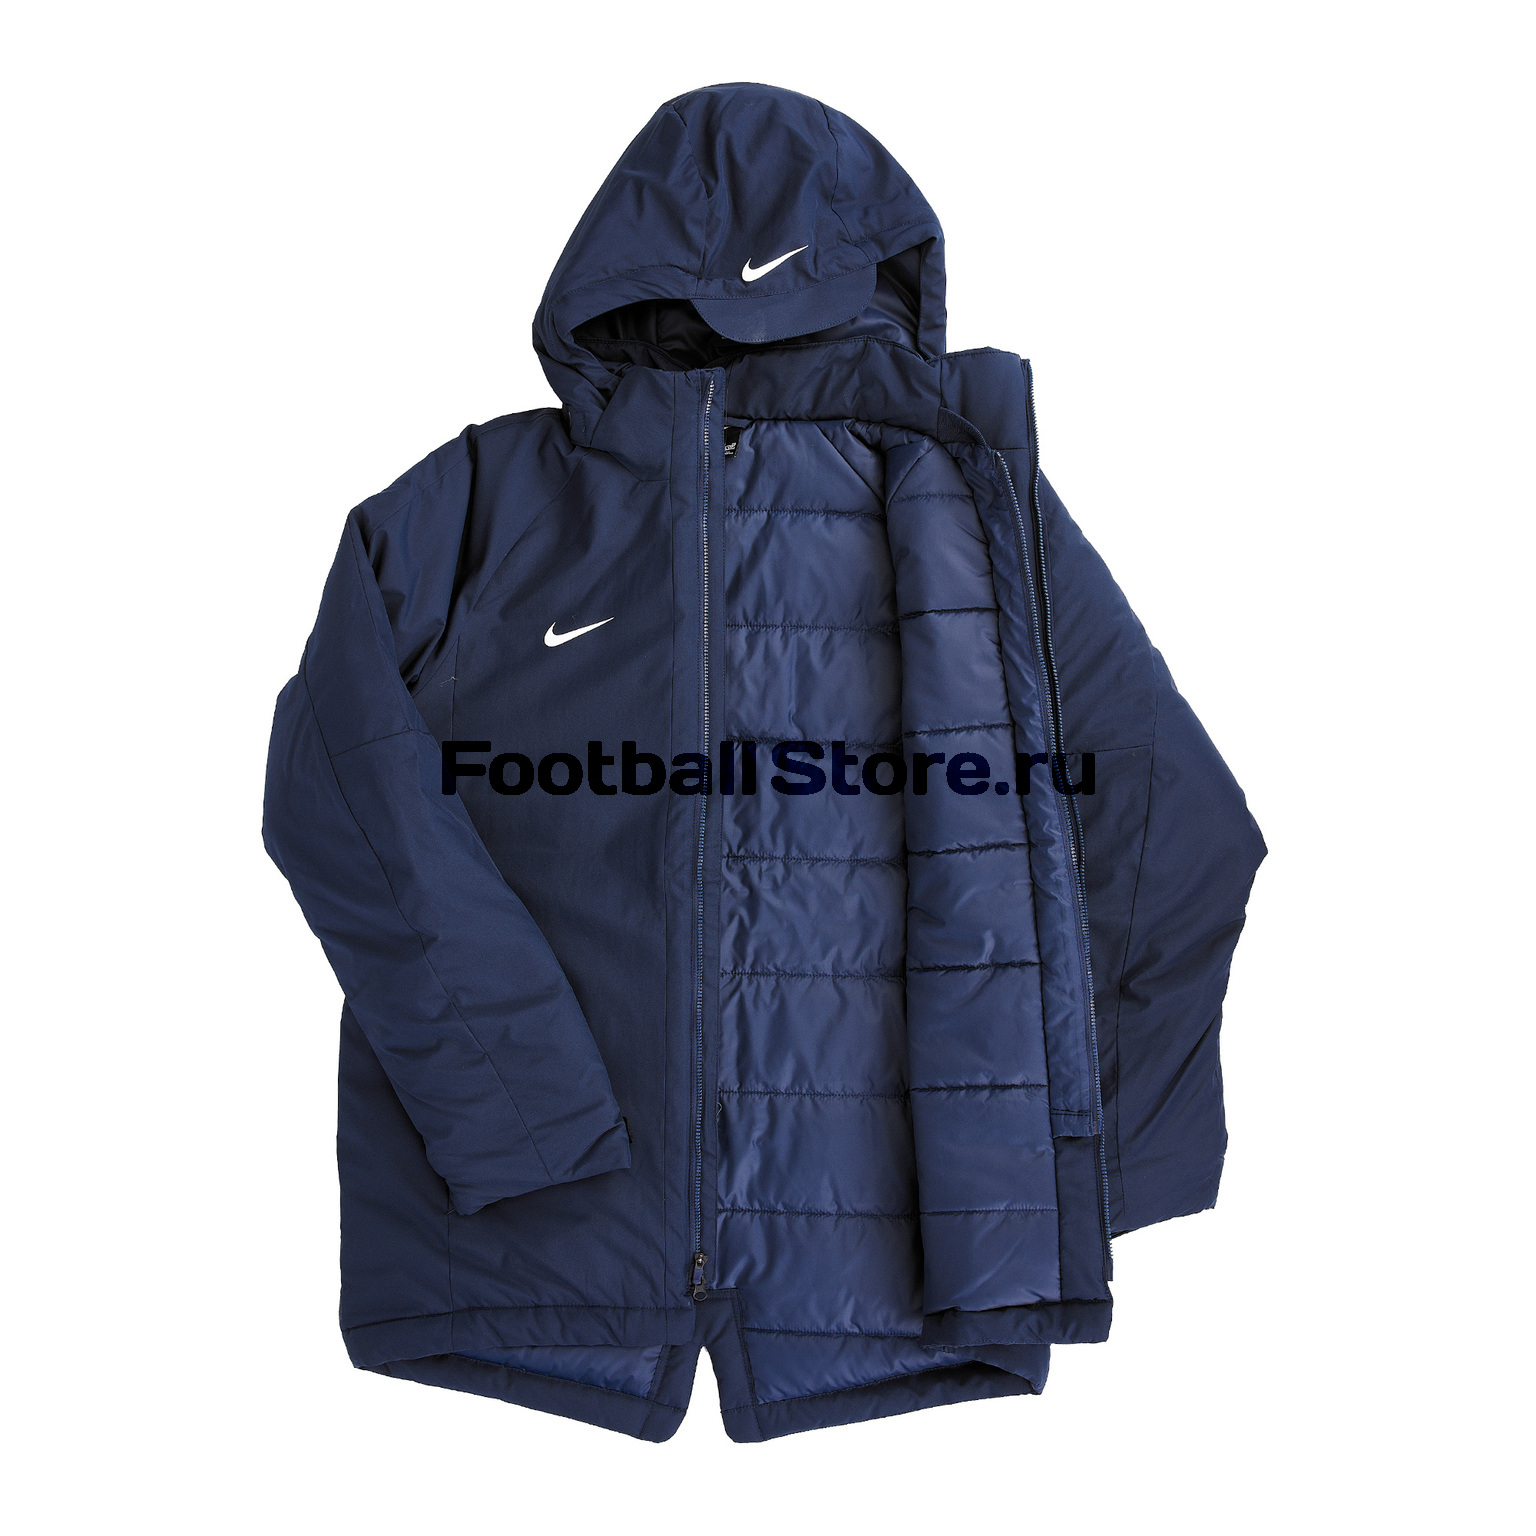 Куртка подростковая Nike Dry Academy18 Jacket 893827-451